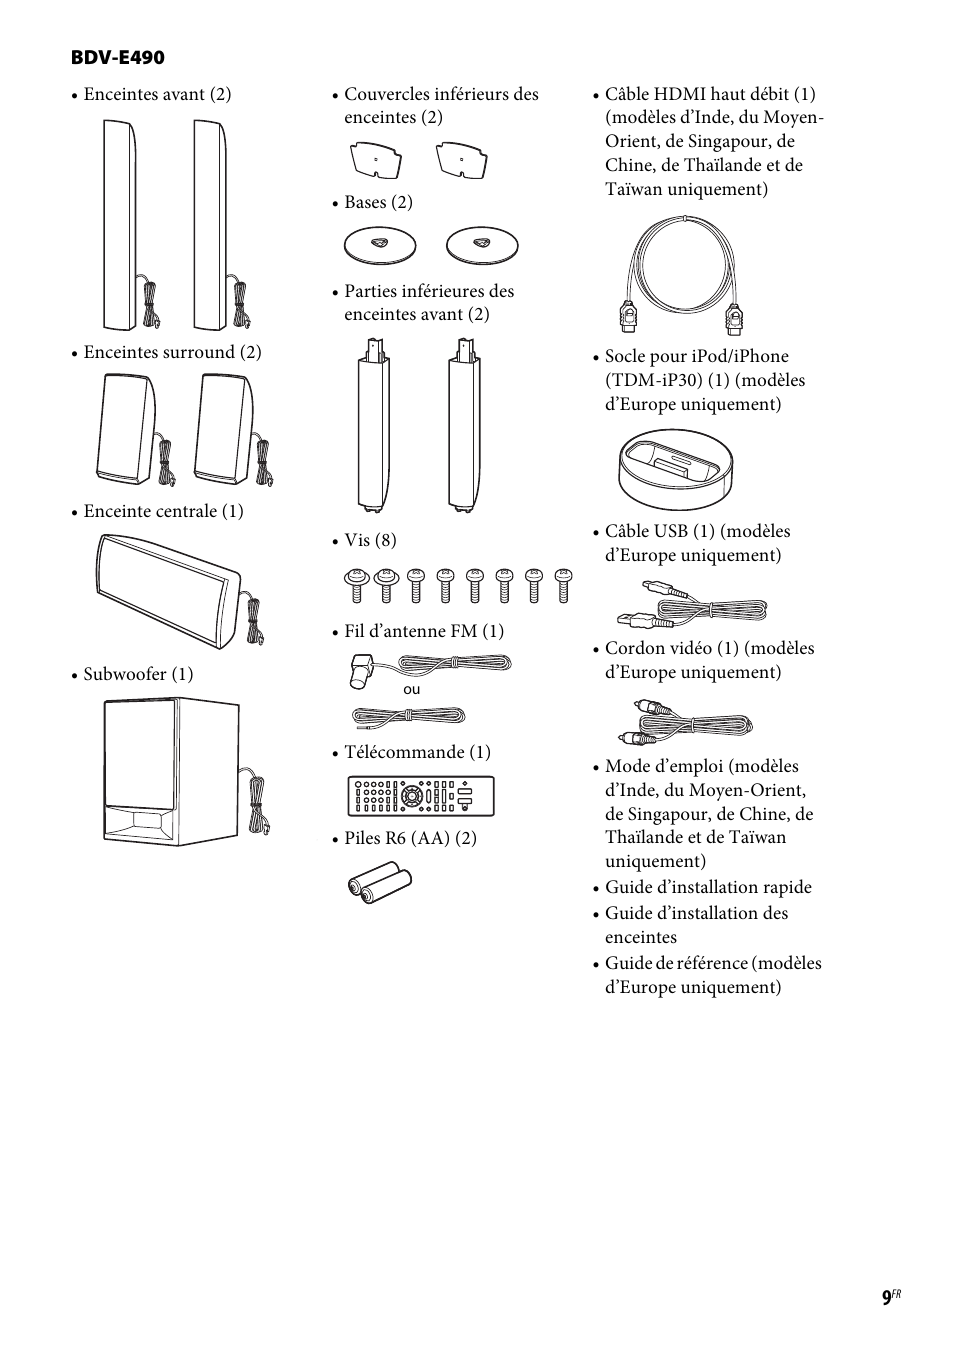 Sony BDV-E190 Manuel d'utilisation | Page 9 / 60